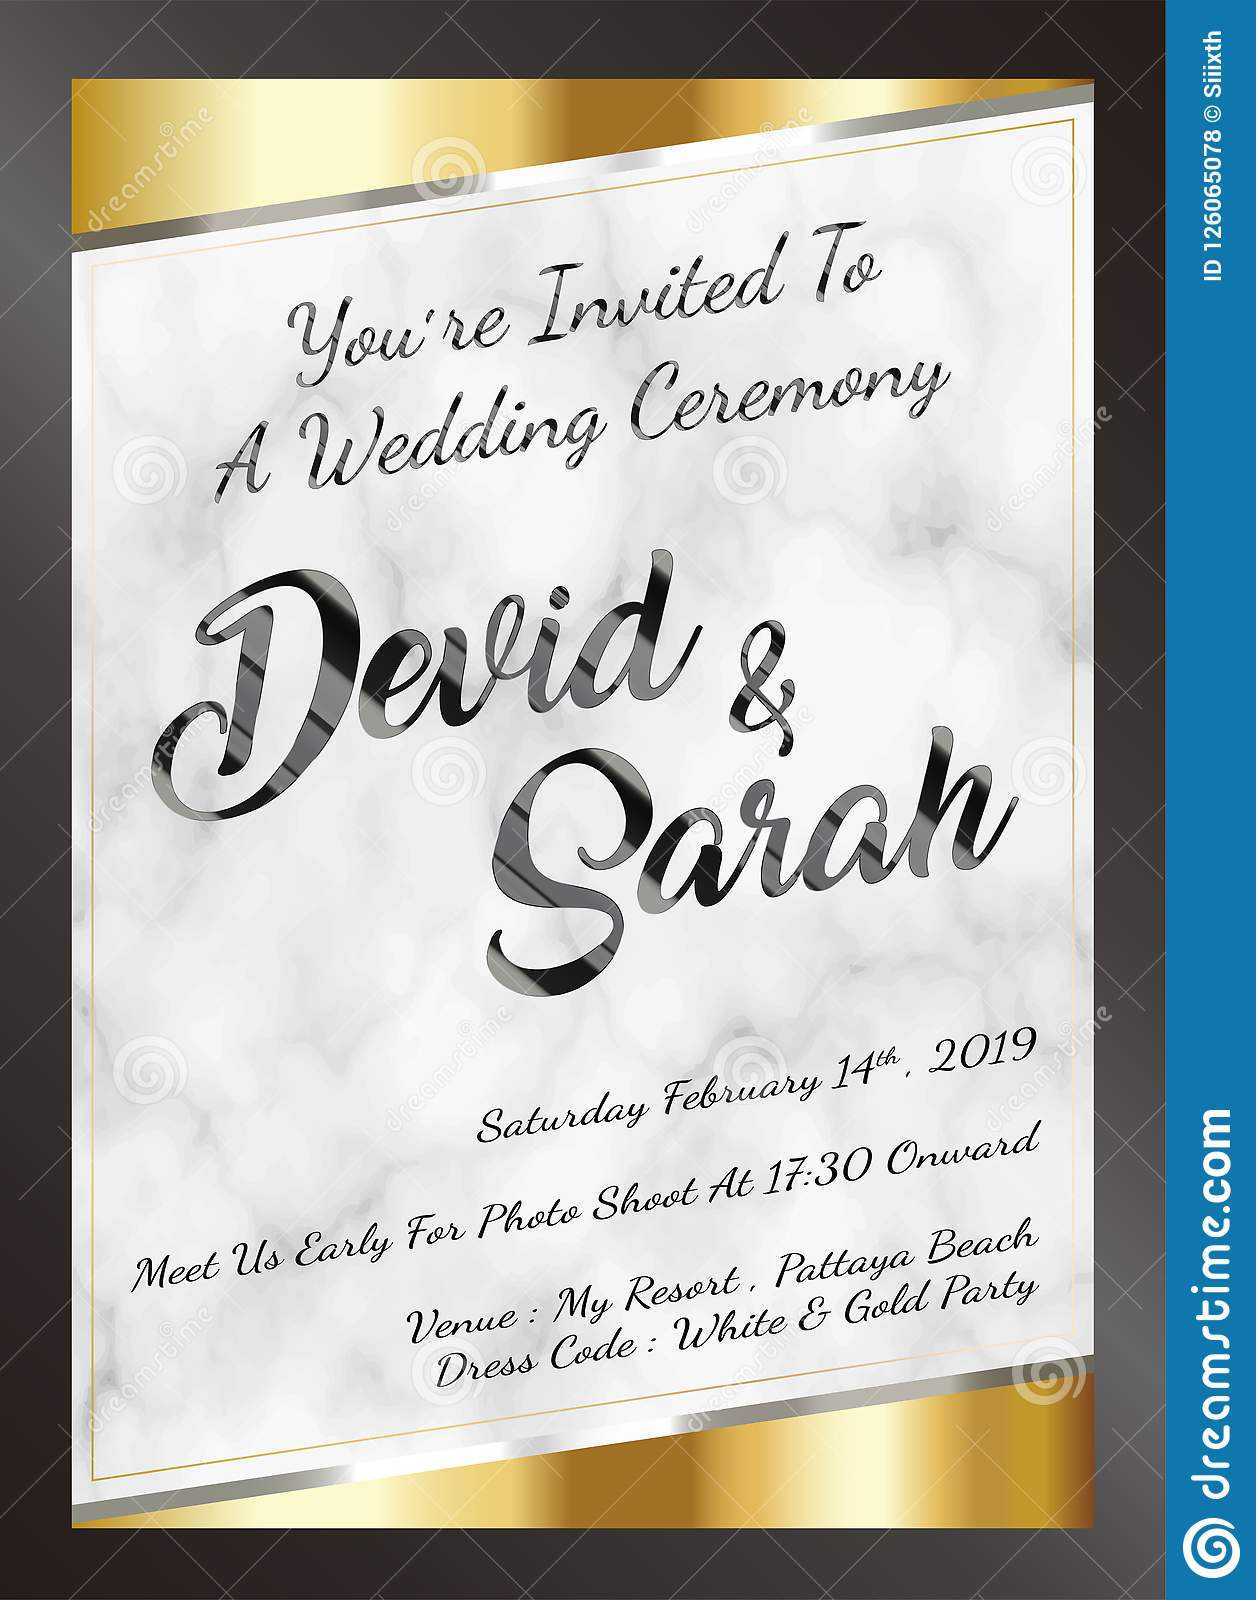 Sample Wedding Card Invitation Template Vector Eps Stock Within Sample Wedding Invitation Cards Templates